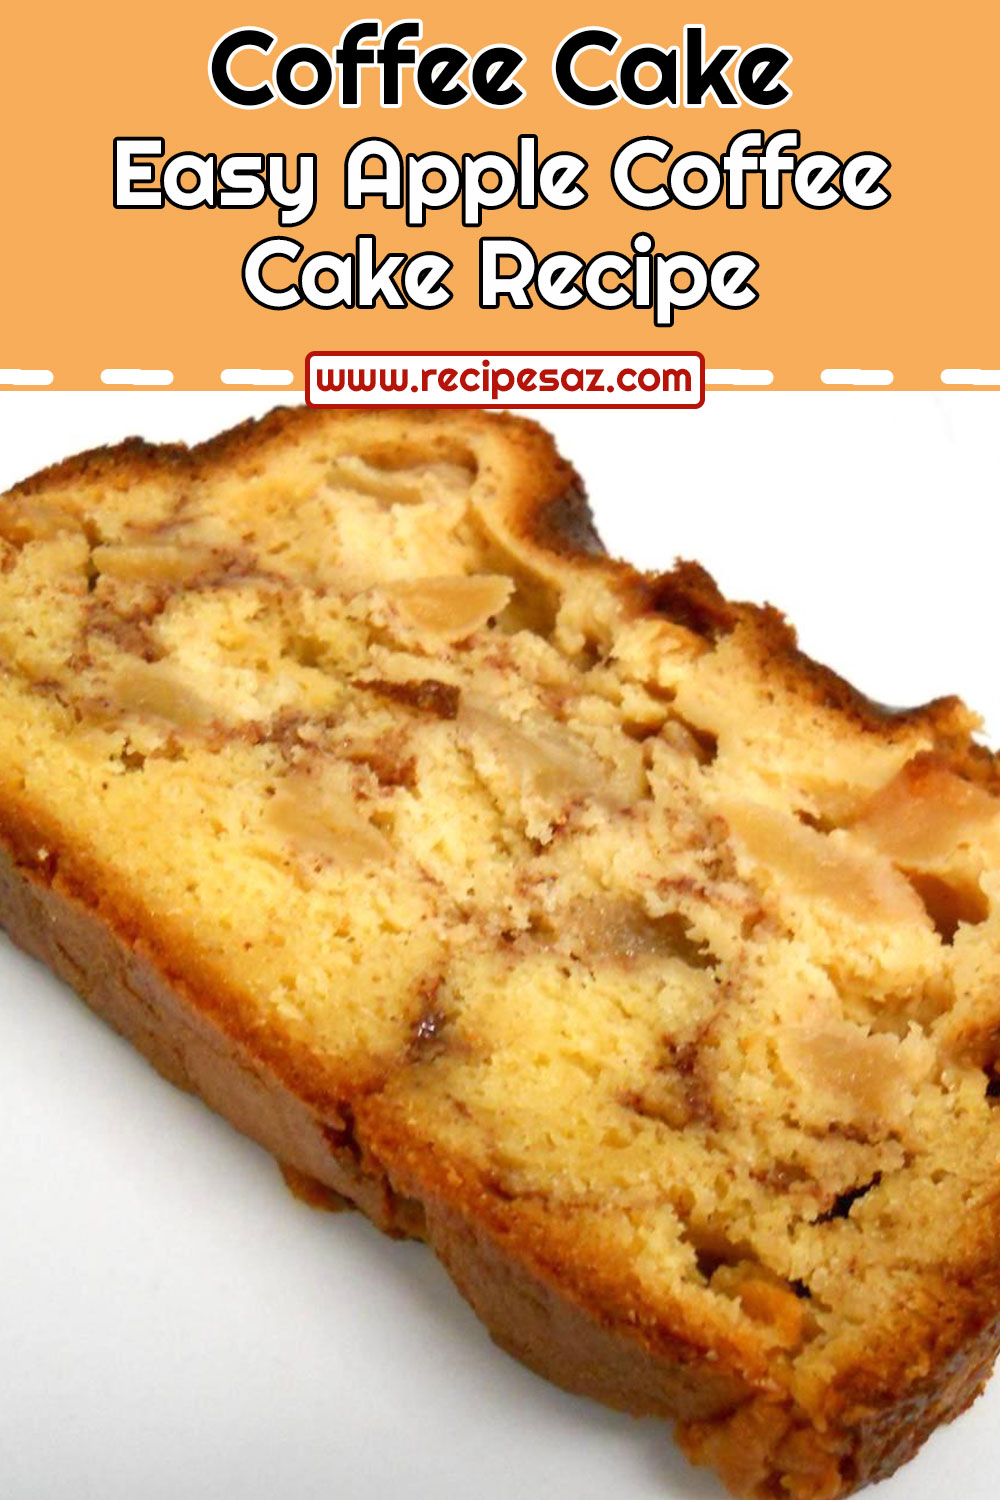 Easy Apple Coffee Cake Recipe